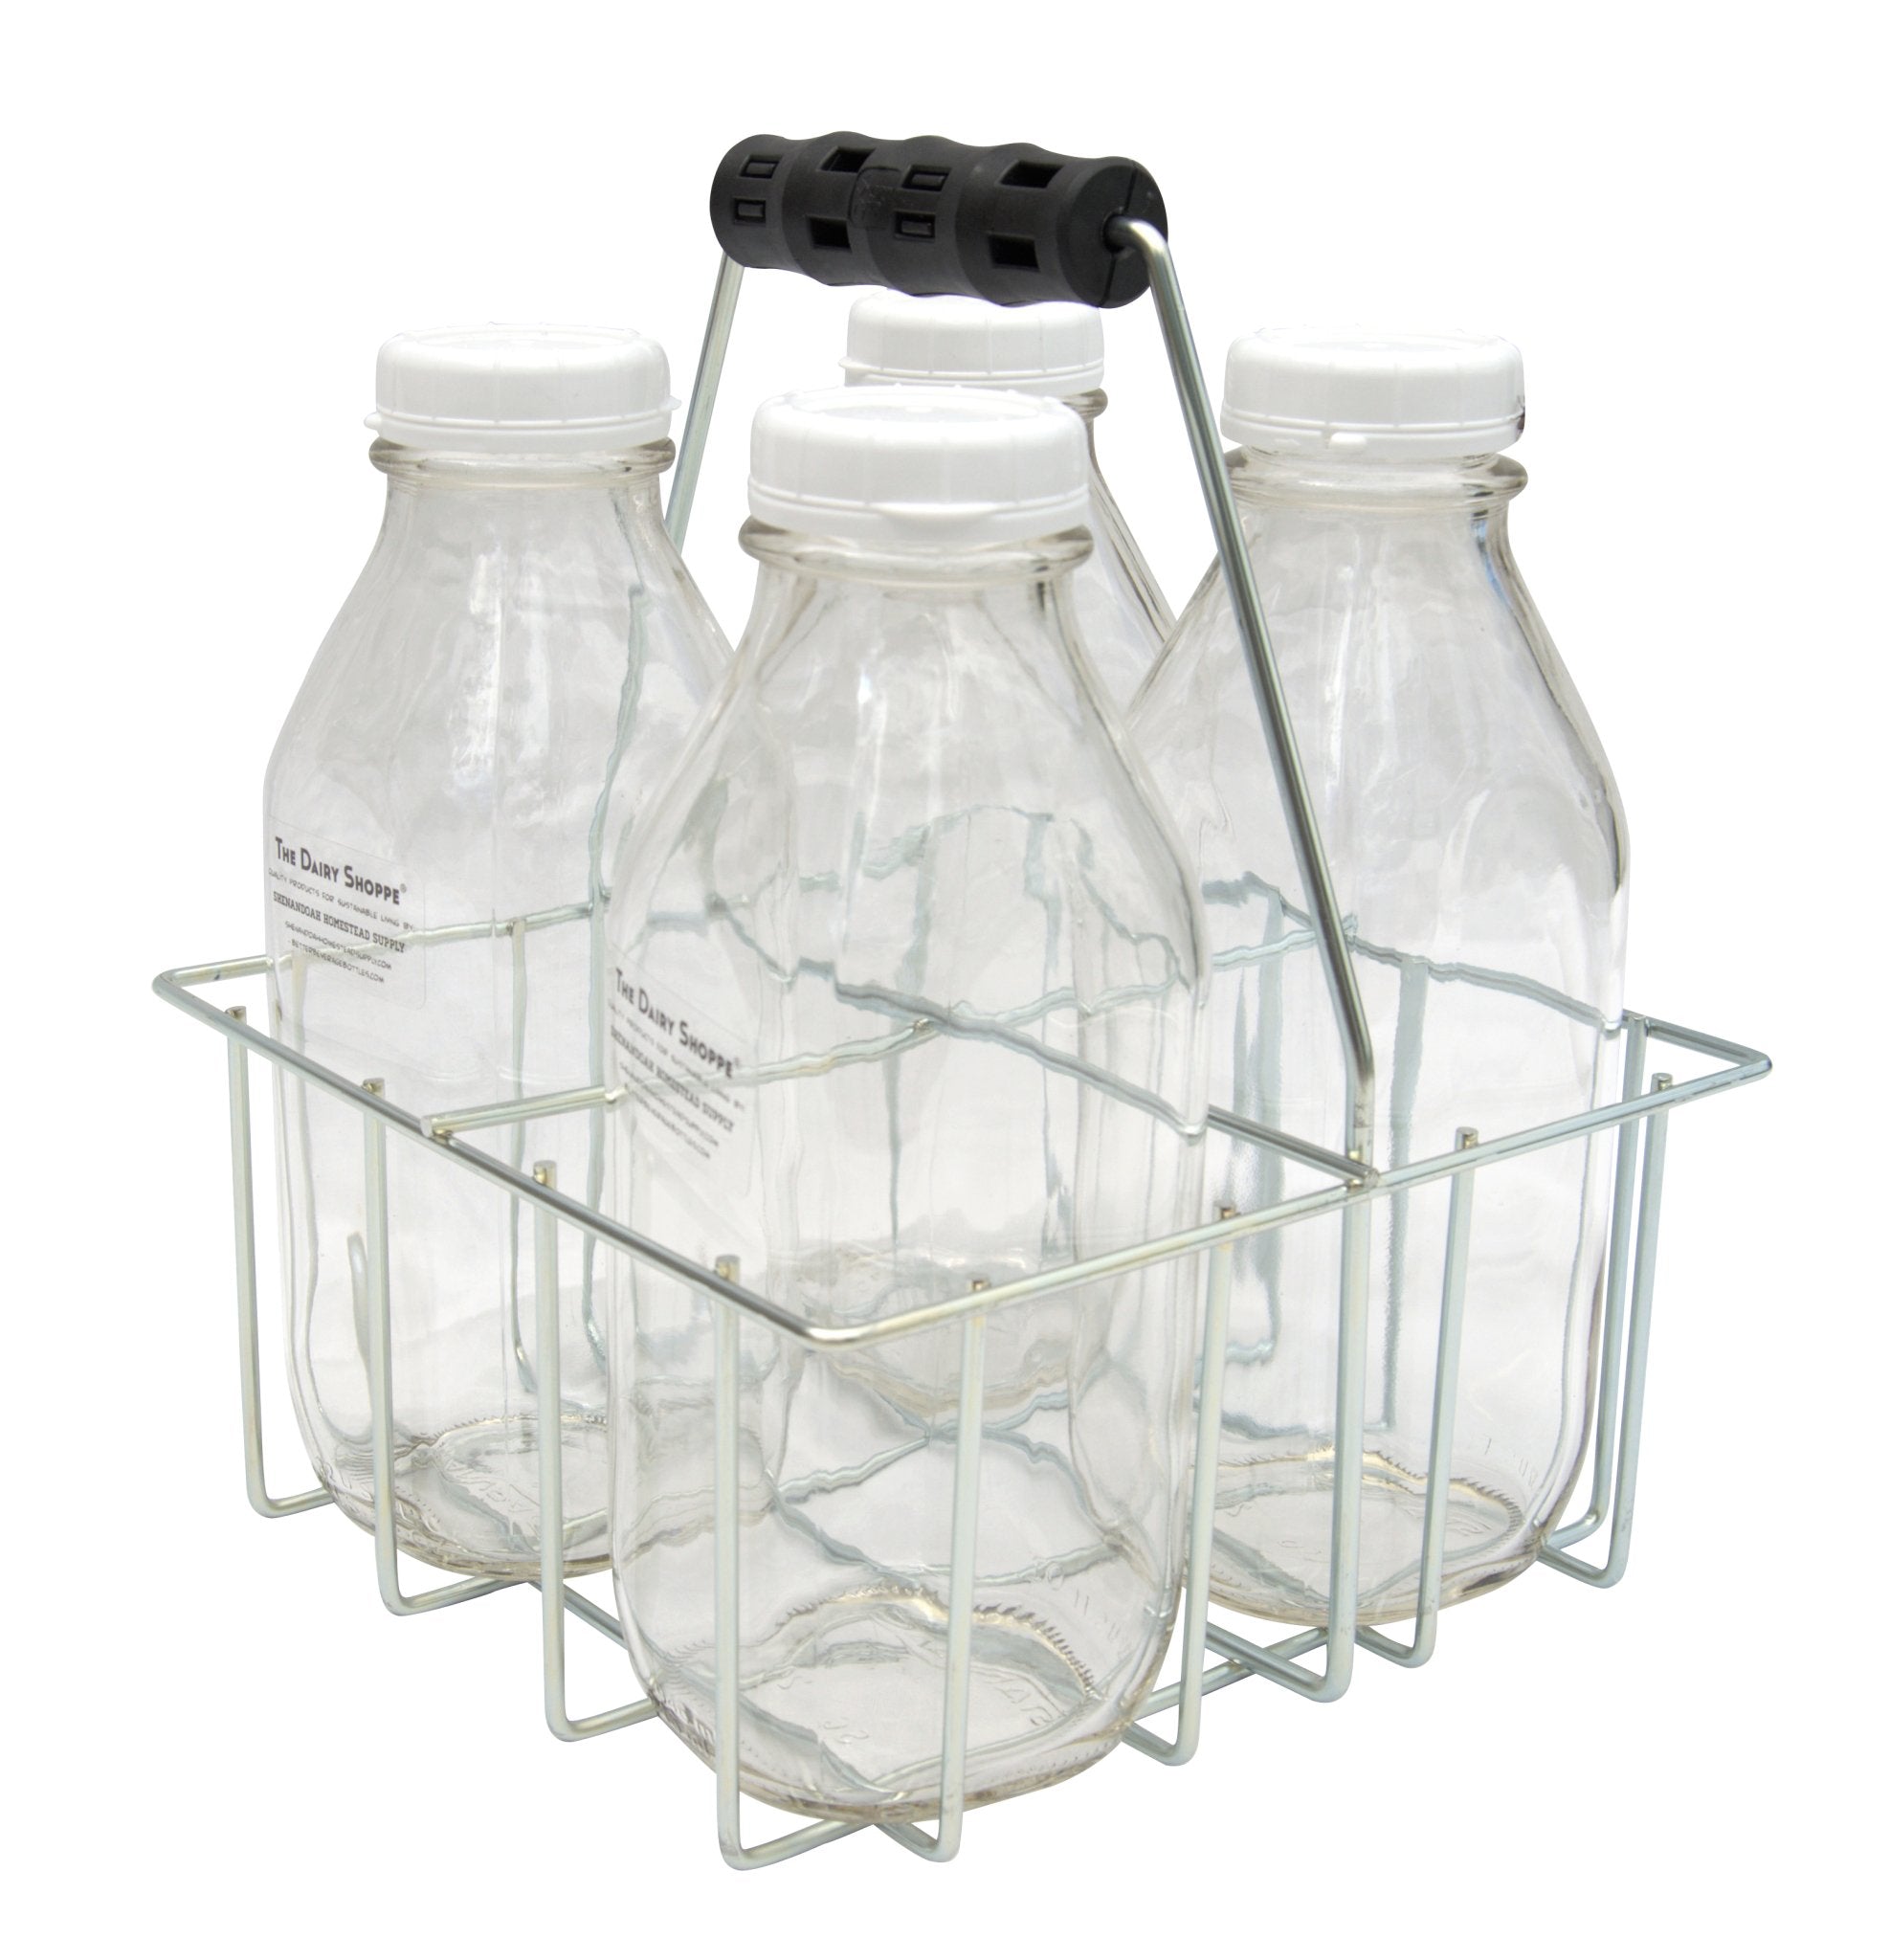 Litre Glass Bottle - Stanpac